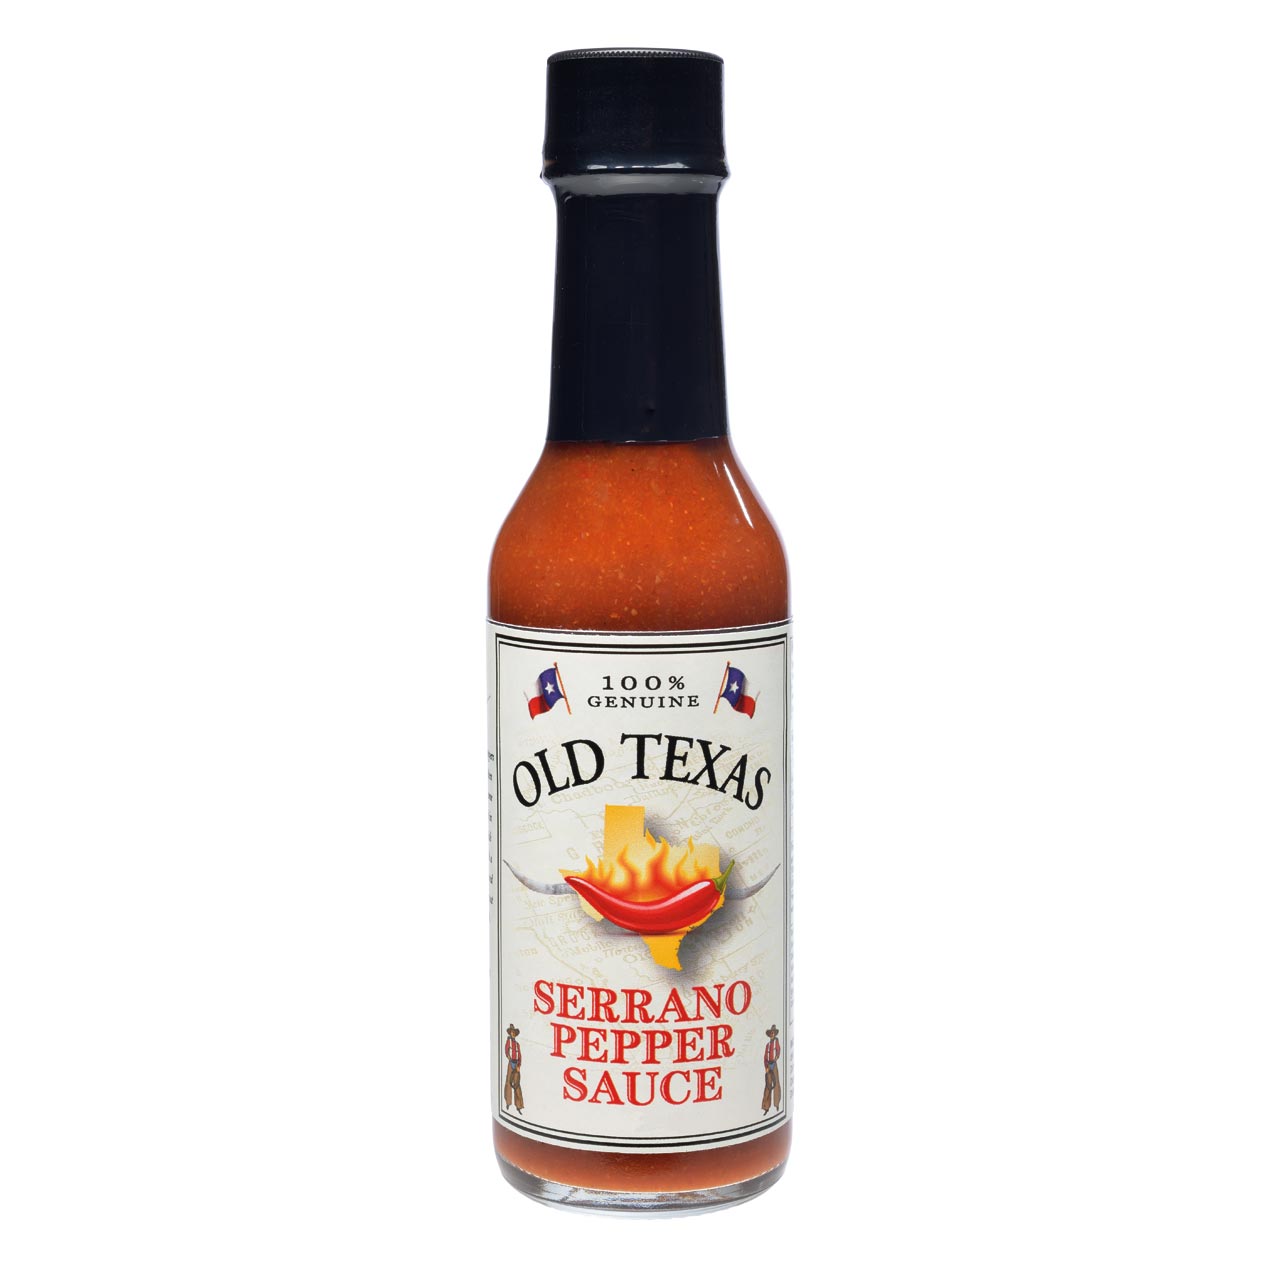 Old Texas - Serrano Pepper Sauce